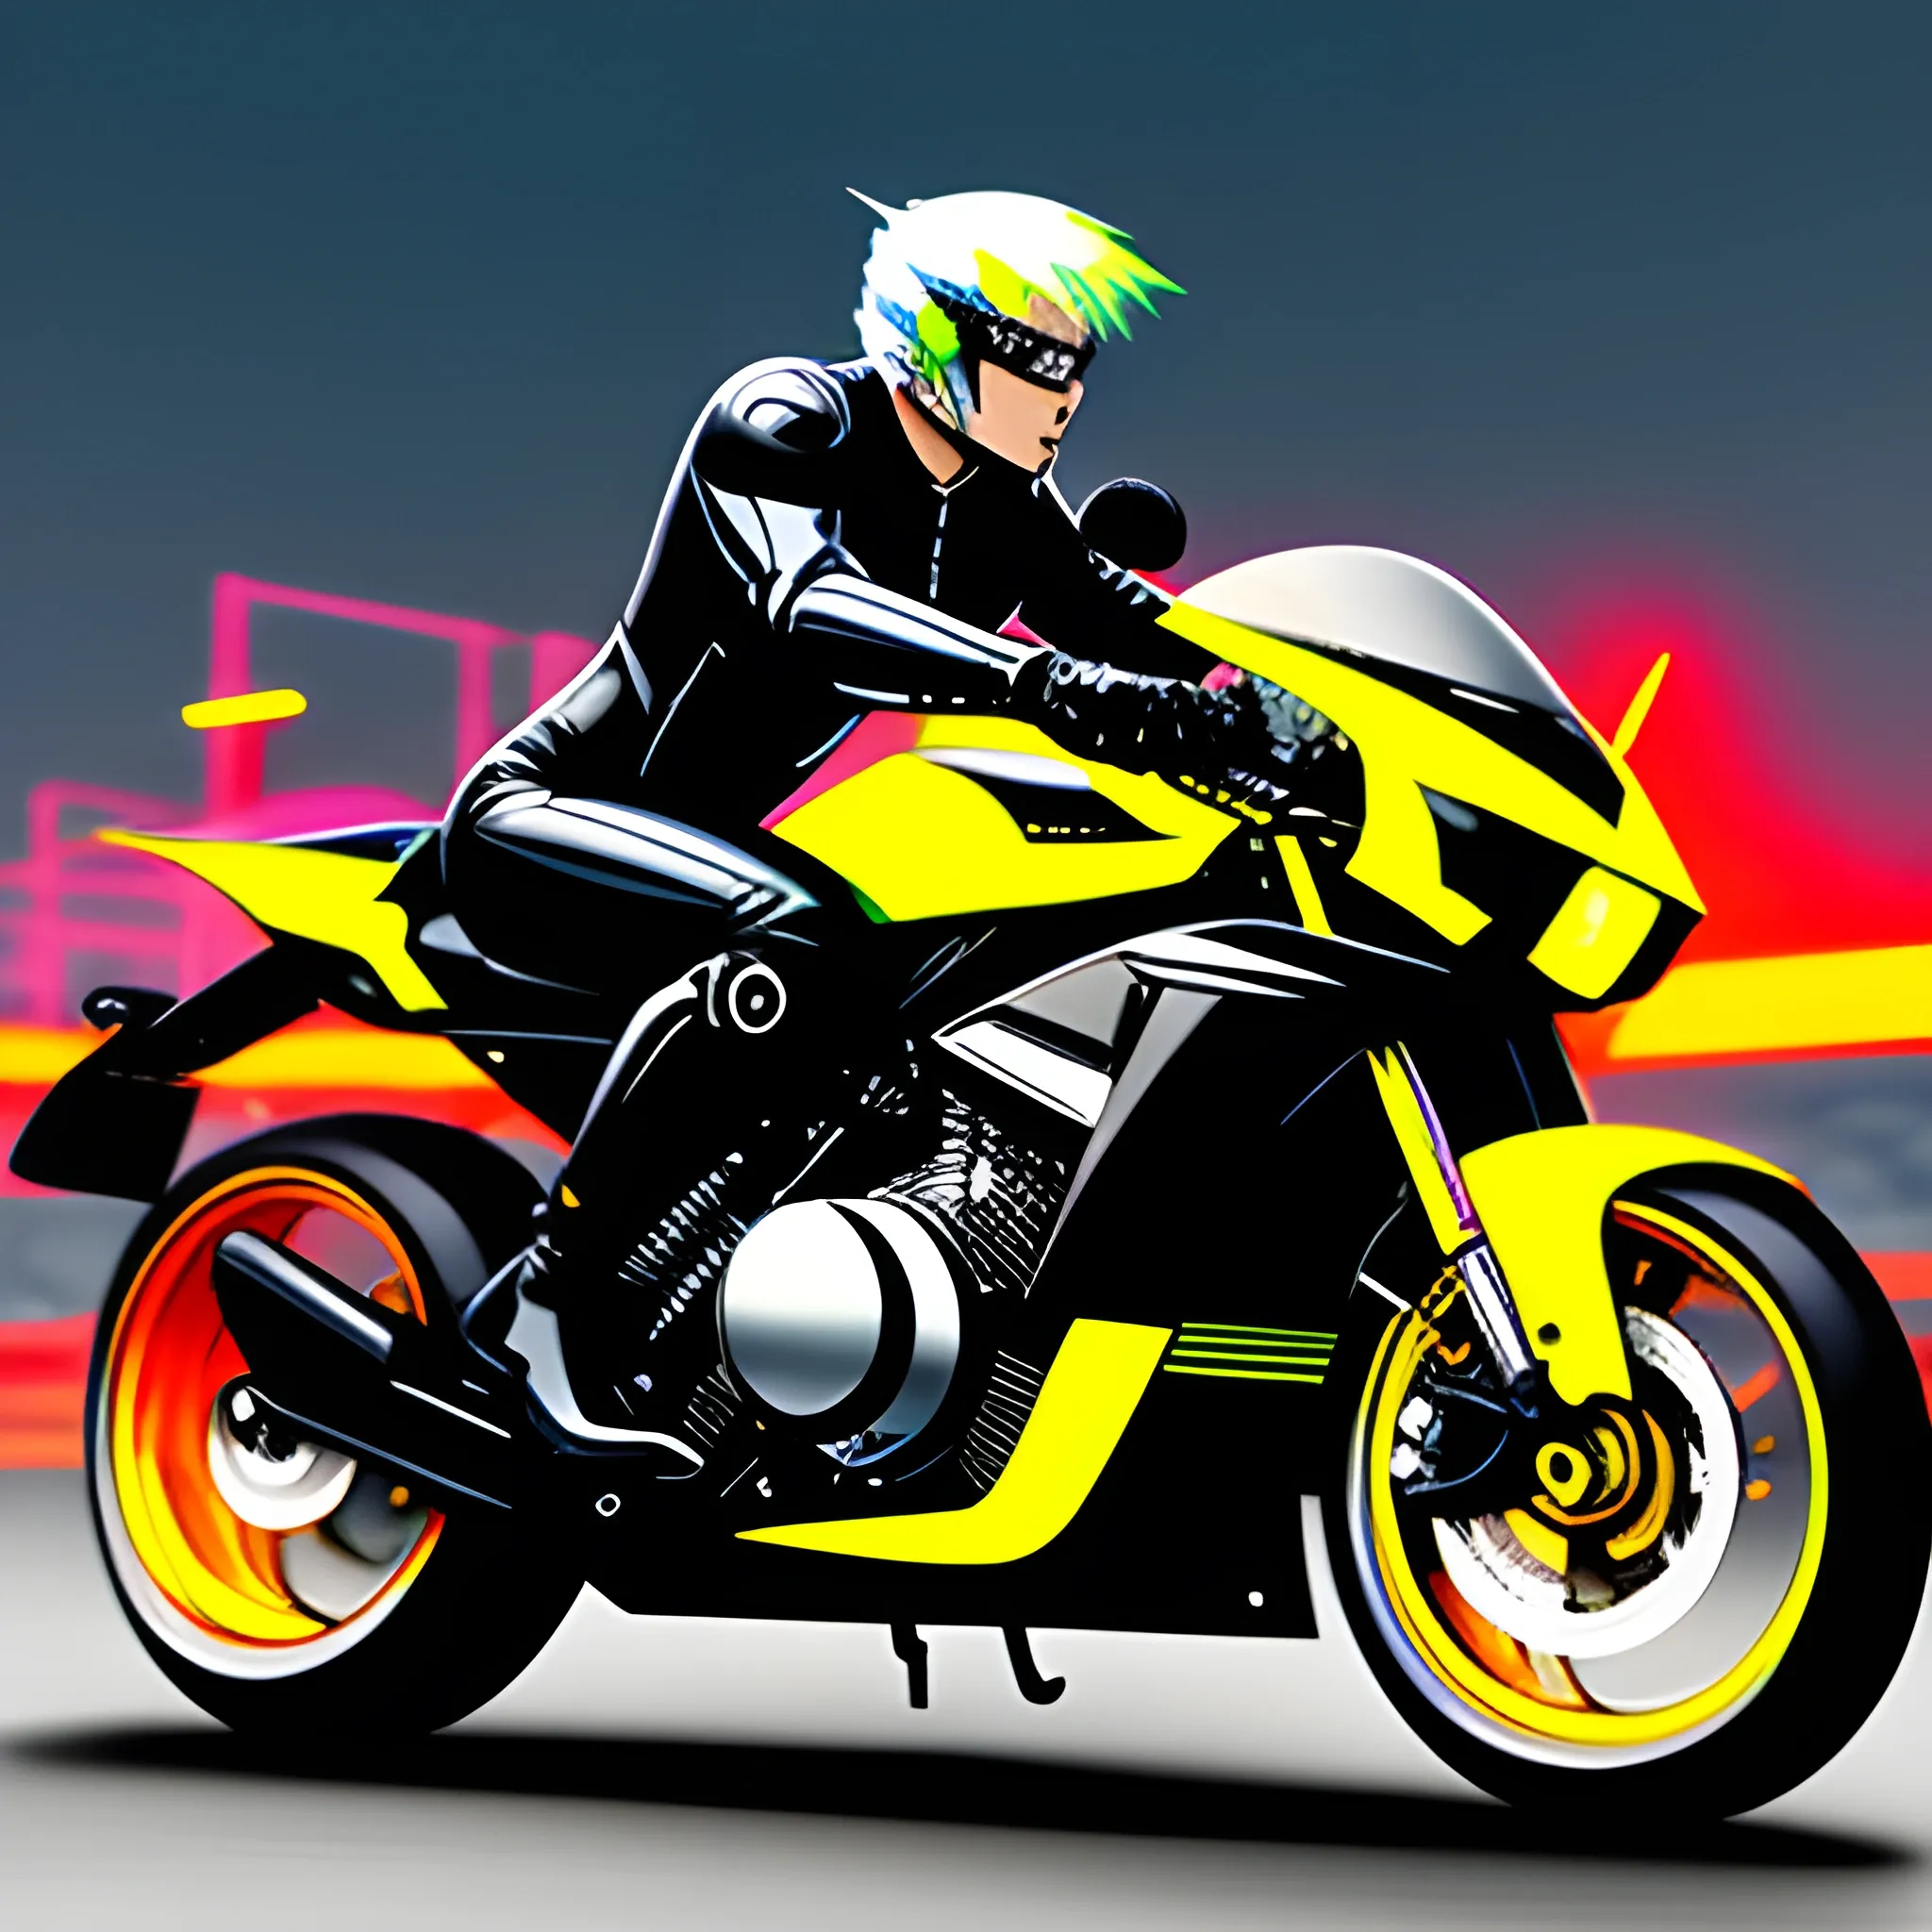  element control anime boy neon motorcycle lightning